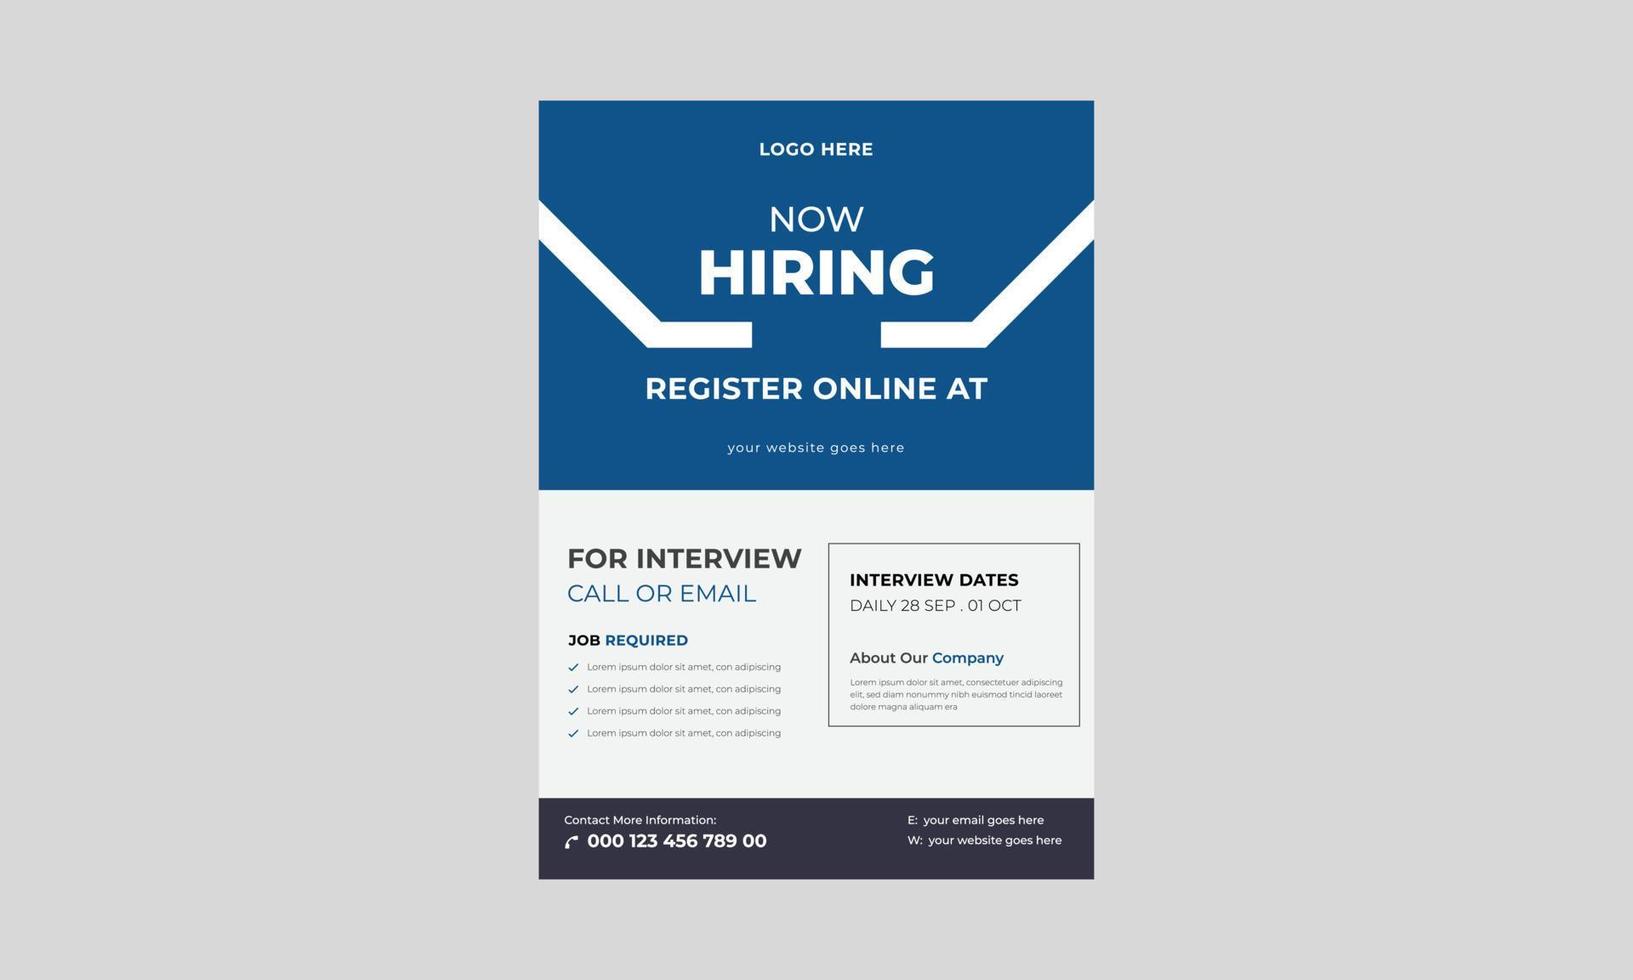 We are hiring flyer design. Job offer leaflet template, Job vacancy flyer poster template design, We are hiring job flyer template. vector